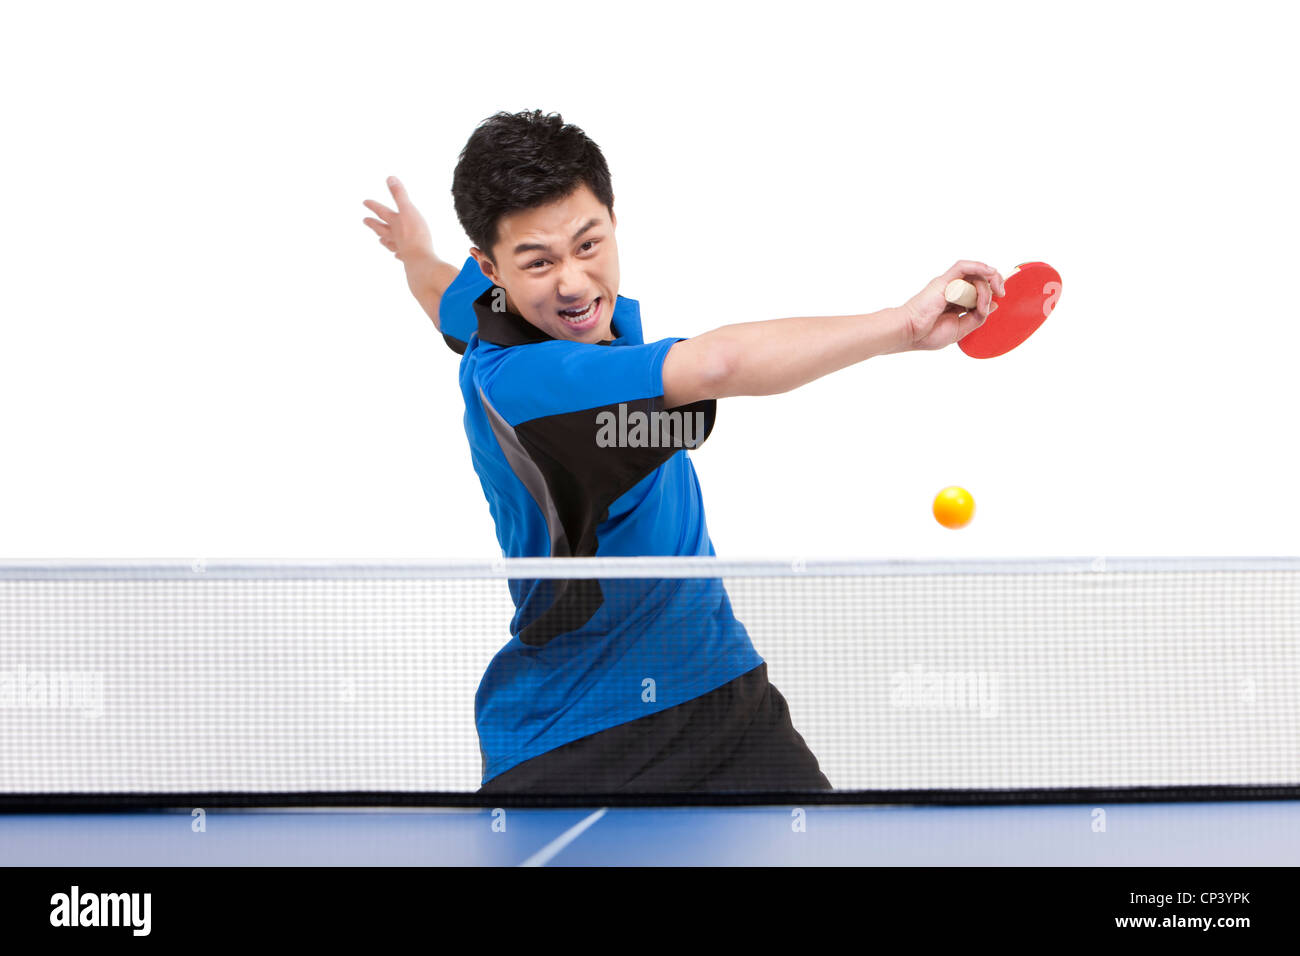 Table tennis player swinging smash Stock Photo - Alamy